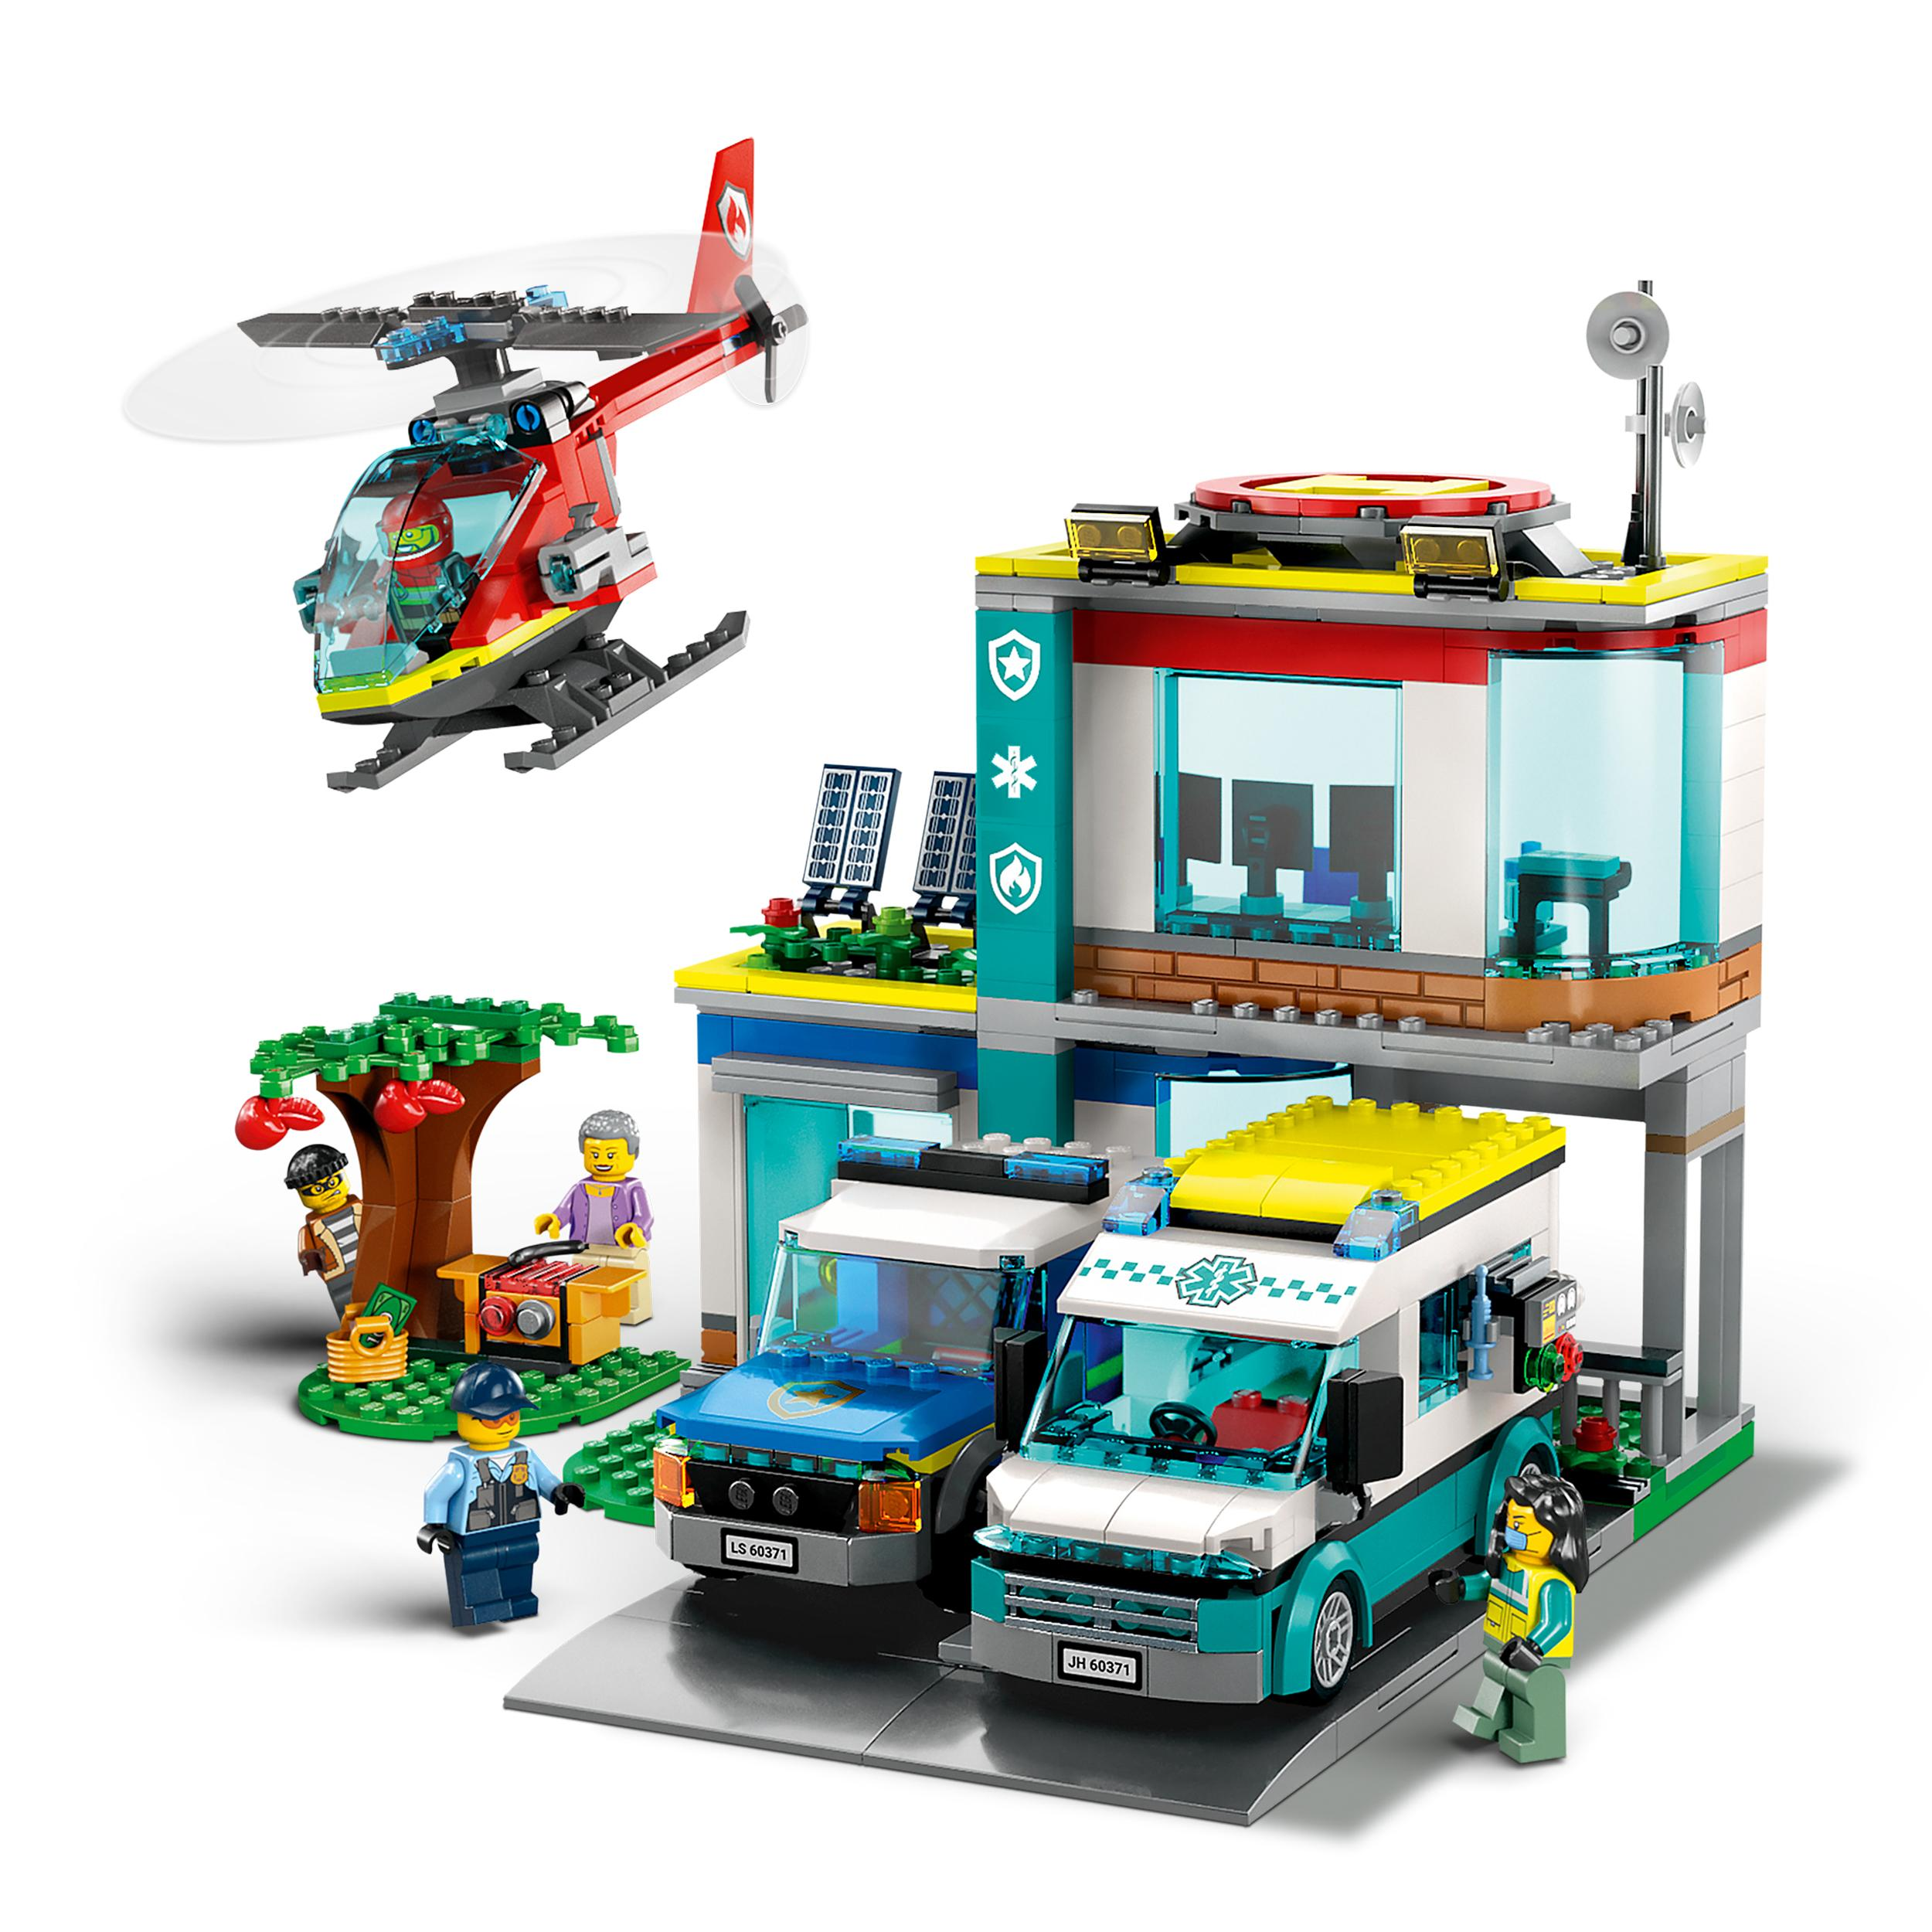 Rettungsfahrzeuge Bausatz, der Mehrfarbig City Hauptquartier 60371 LEGO